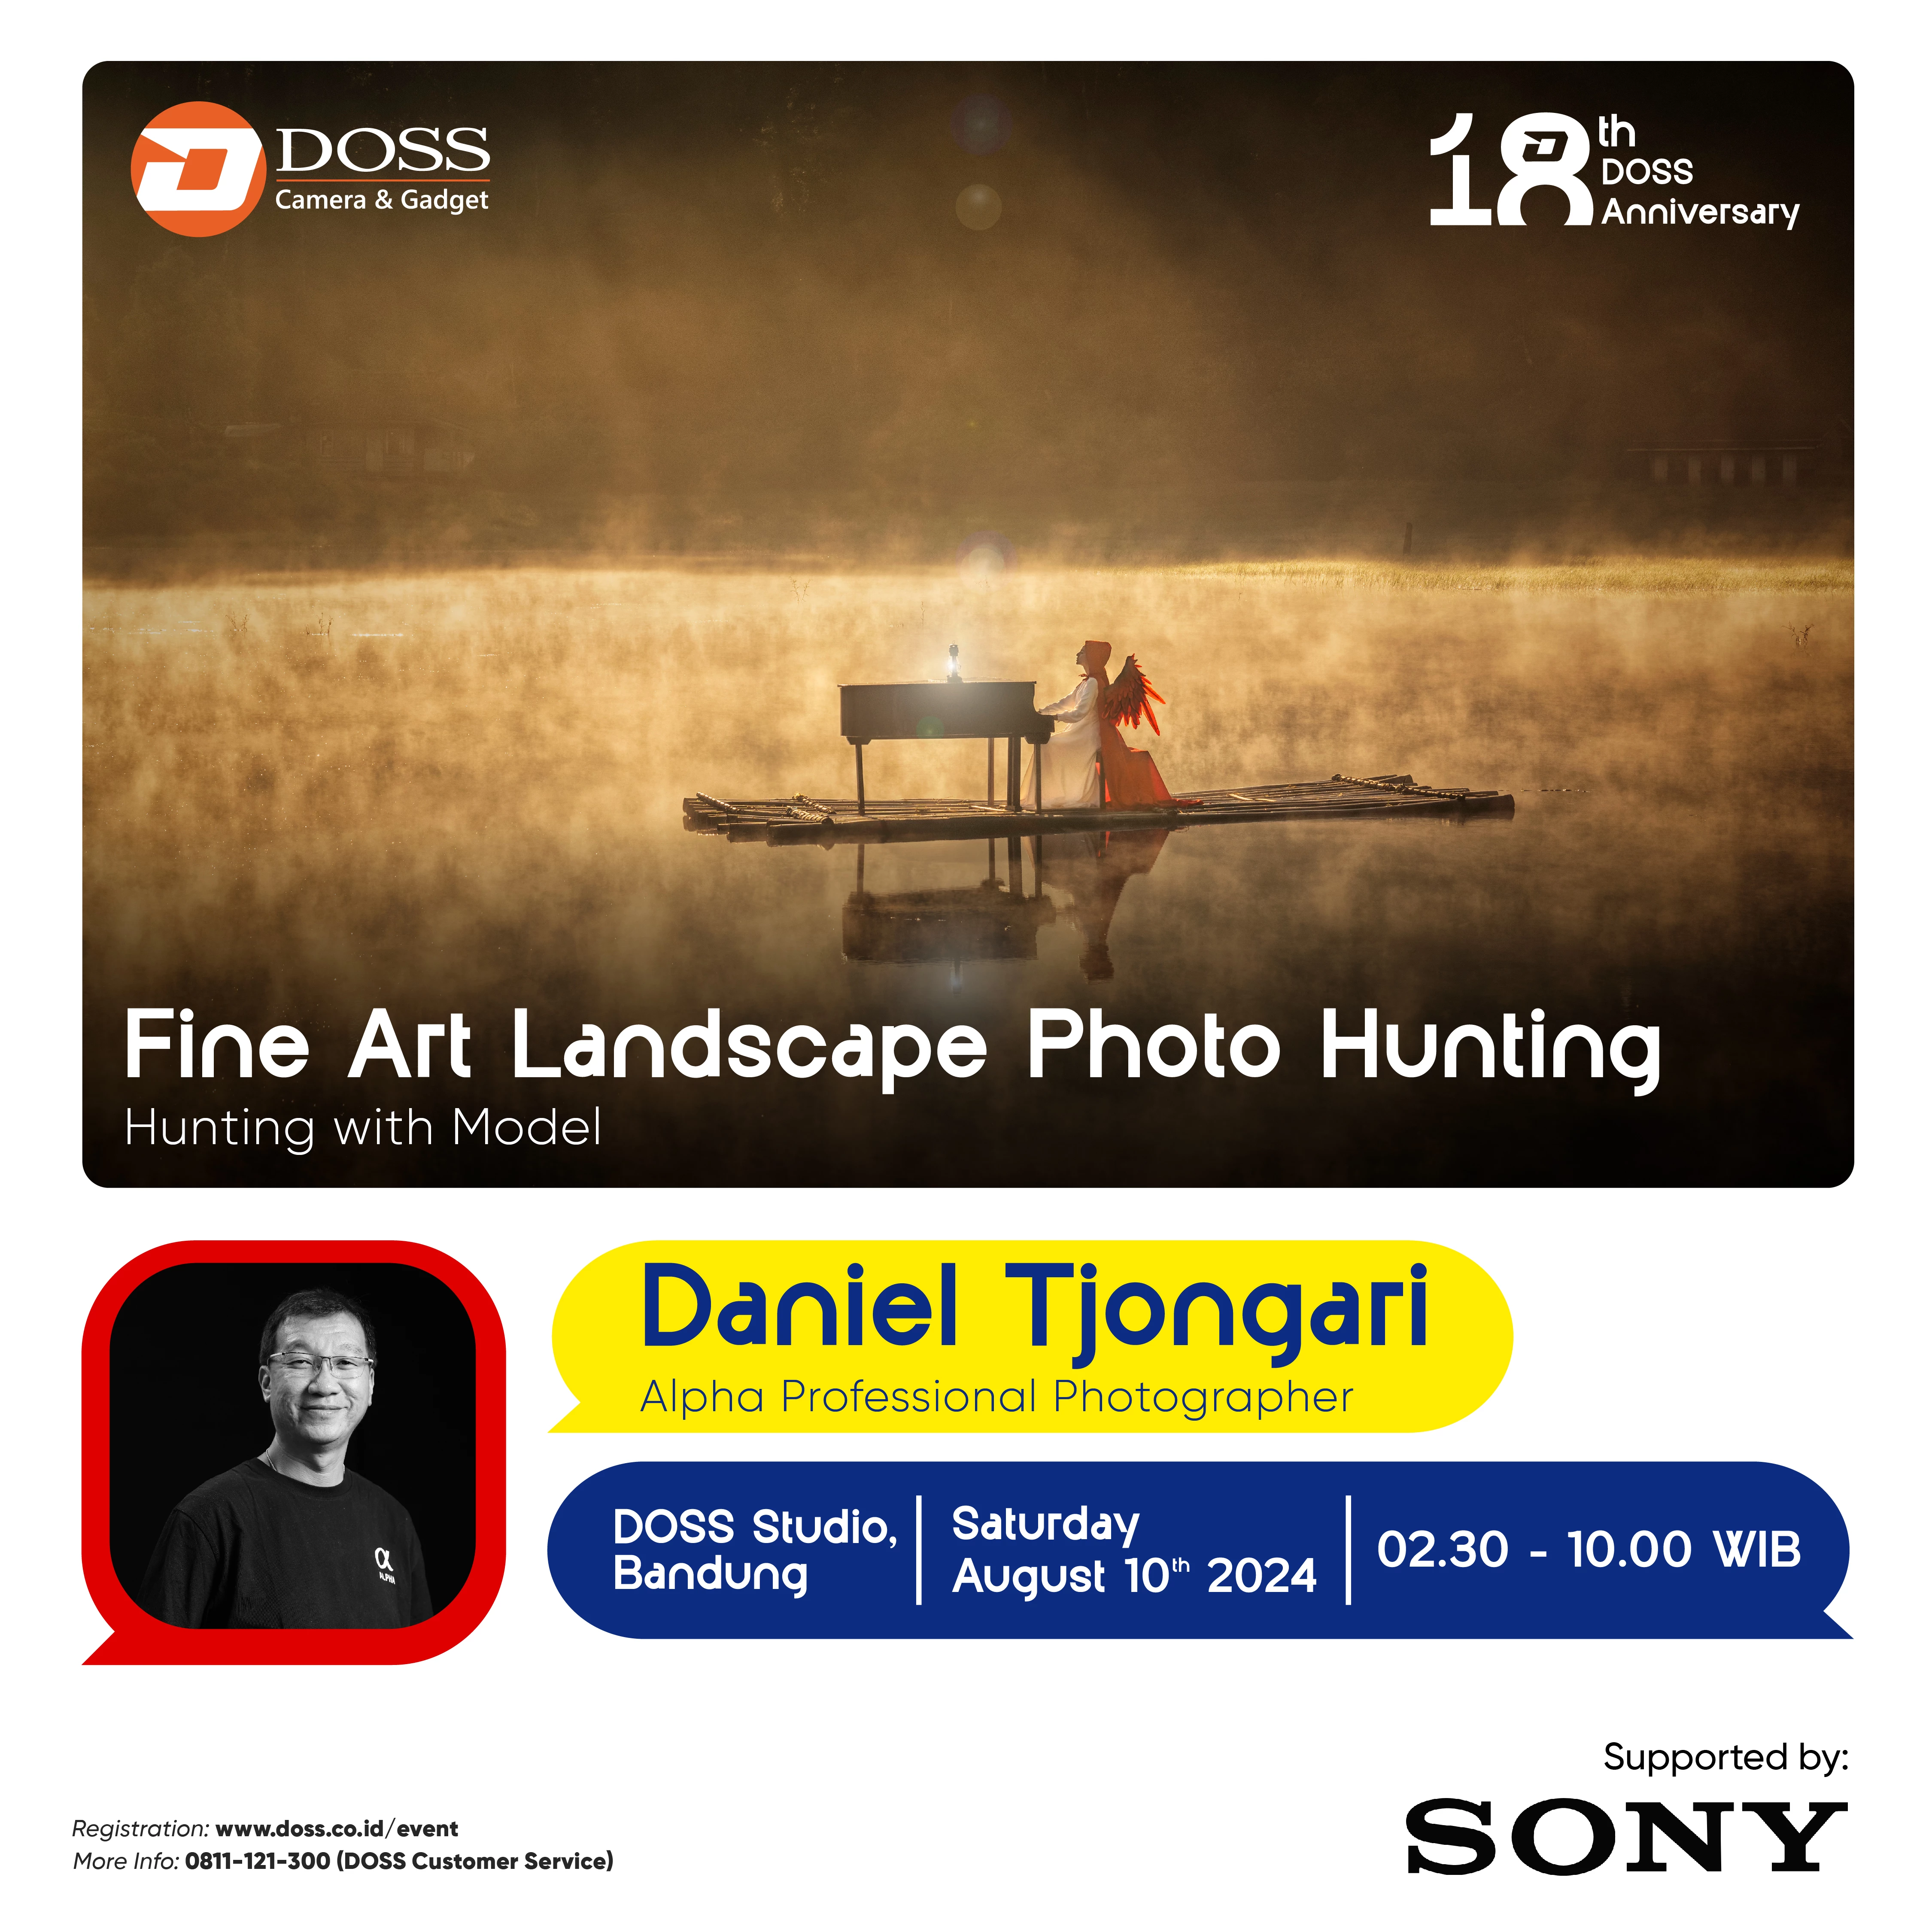 BDG - Landscape Photography: "Fine Art Landscape Photo Hunting"